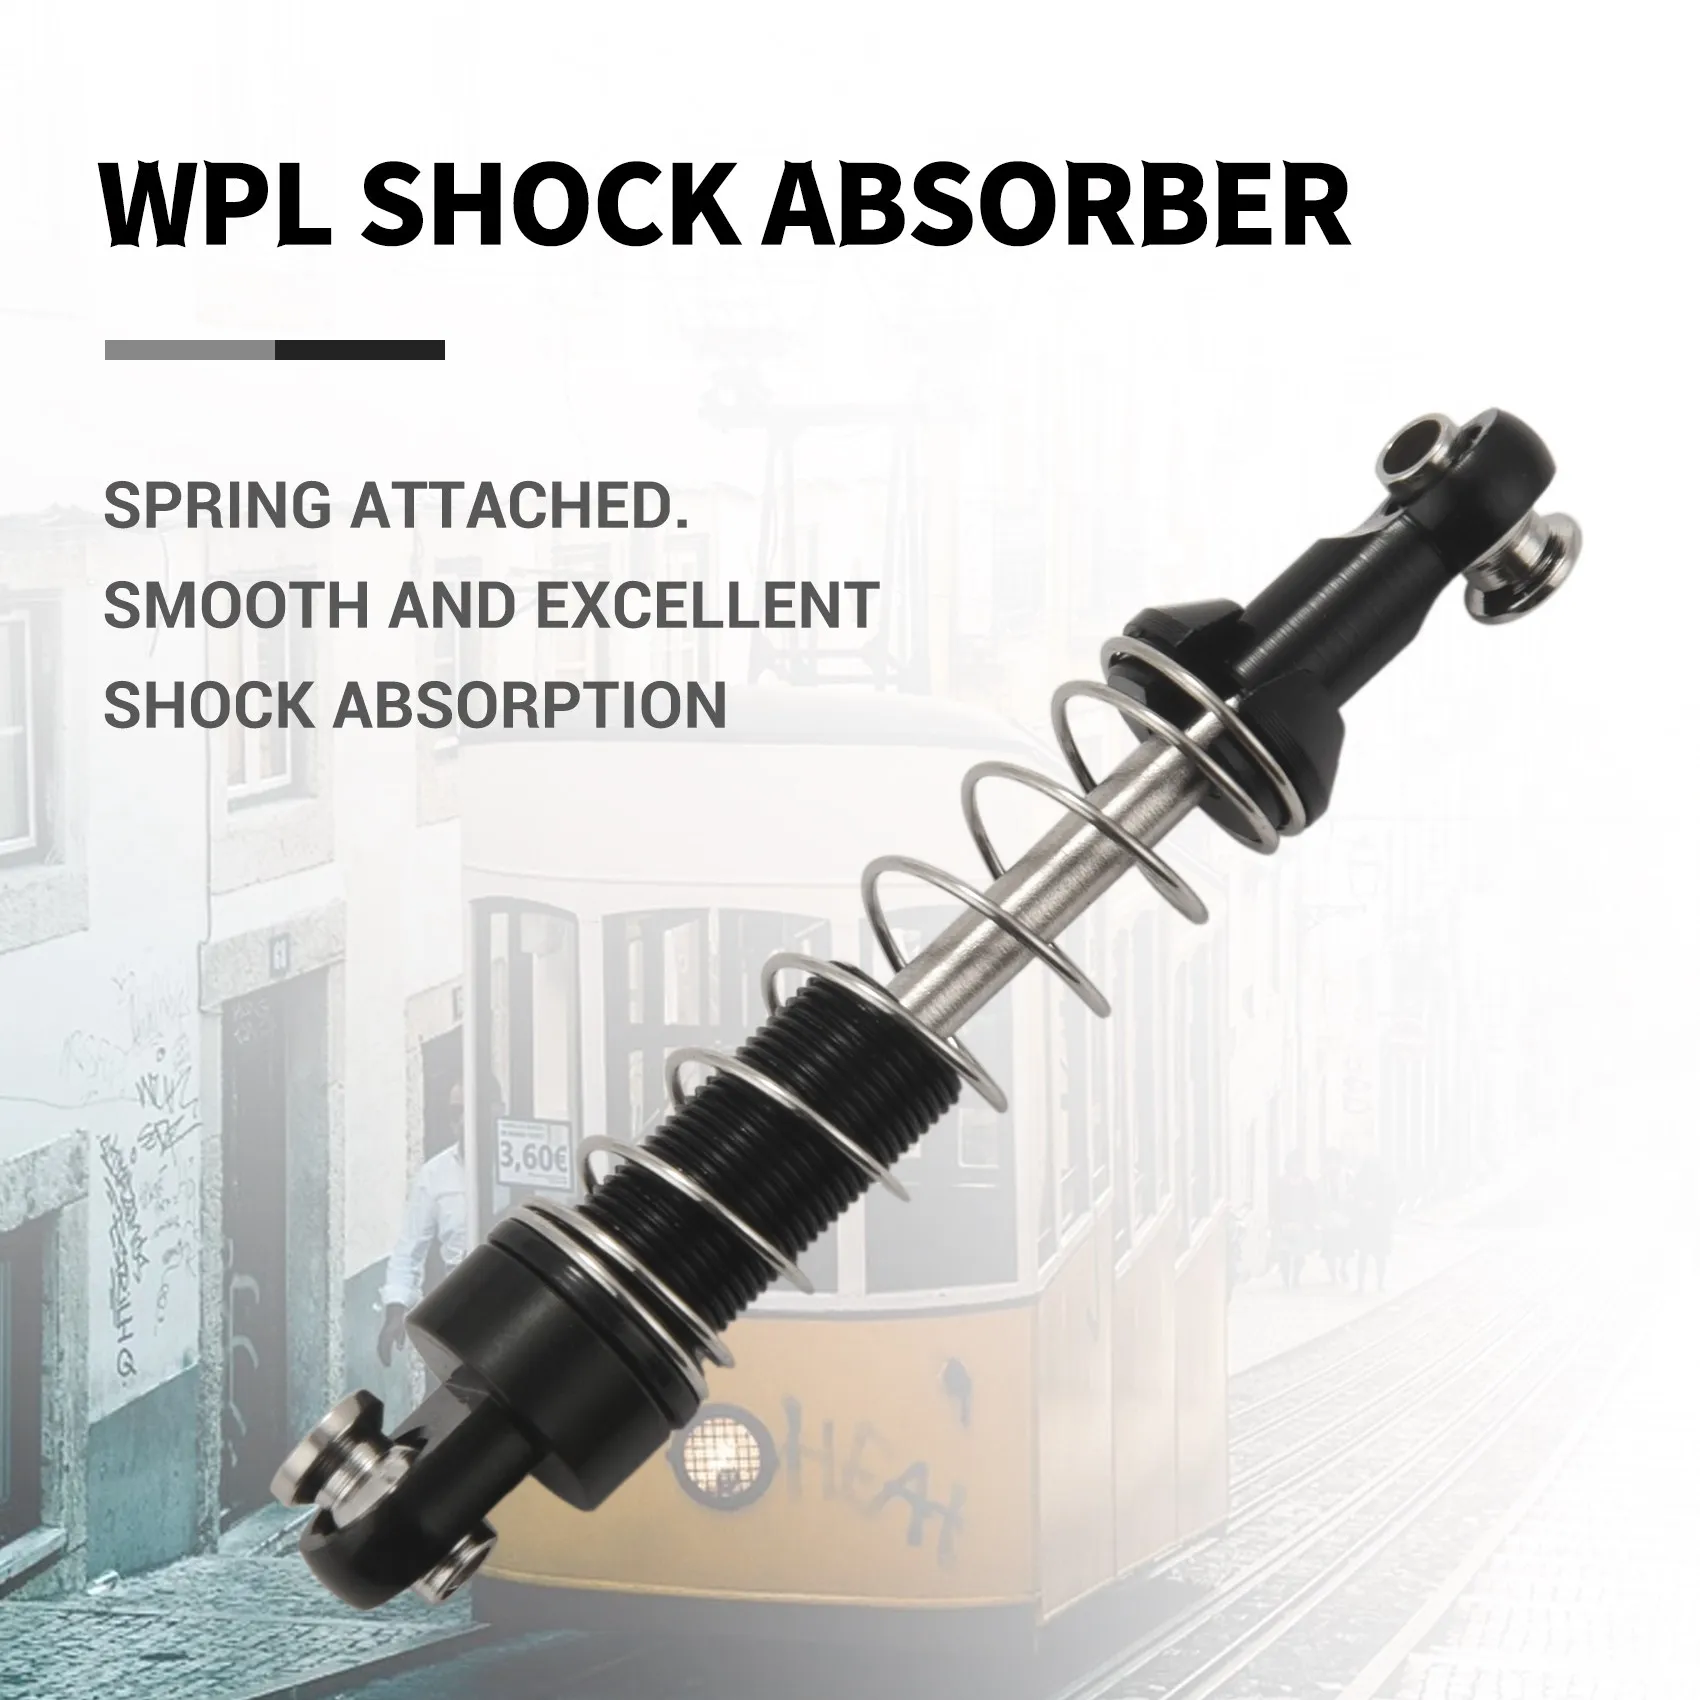 

4Pcs Shock Absorber Damper with Extender for WPL C14 C24 MN D90 D91 D99S RC Car Accessories,Black